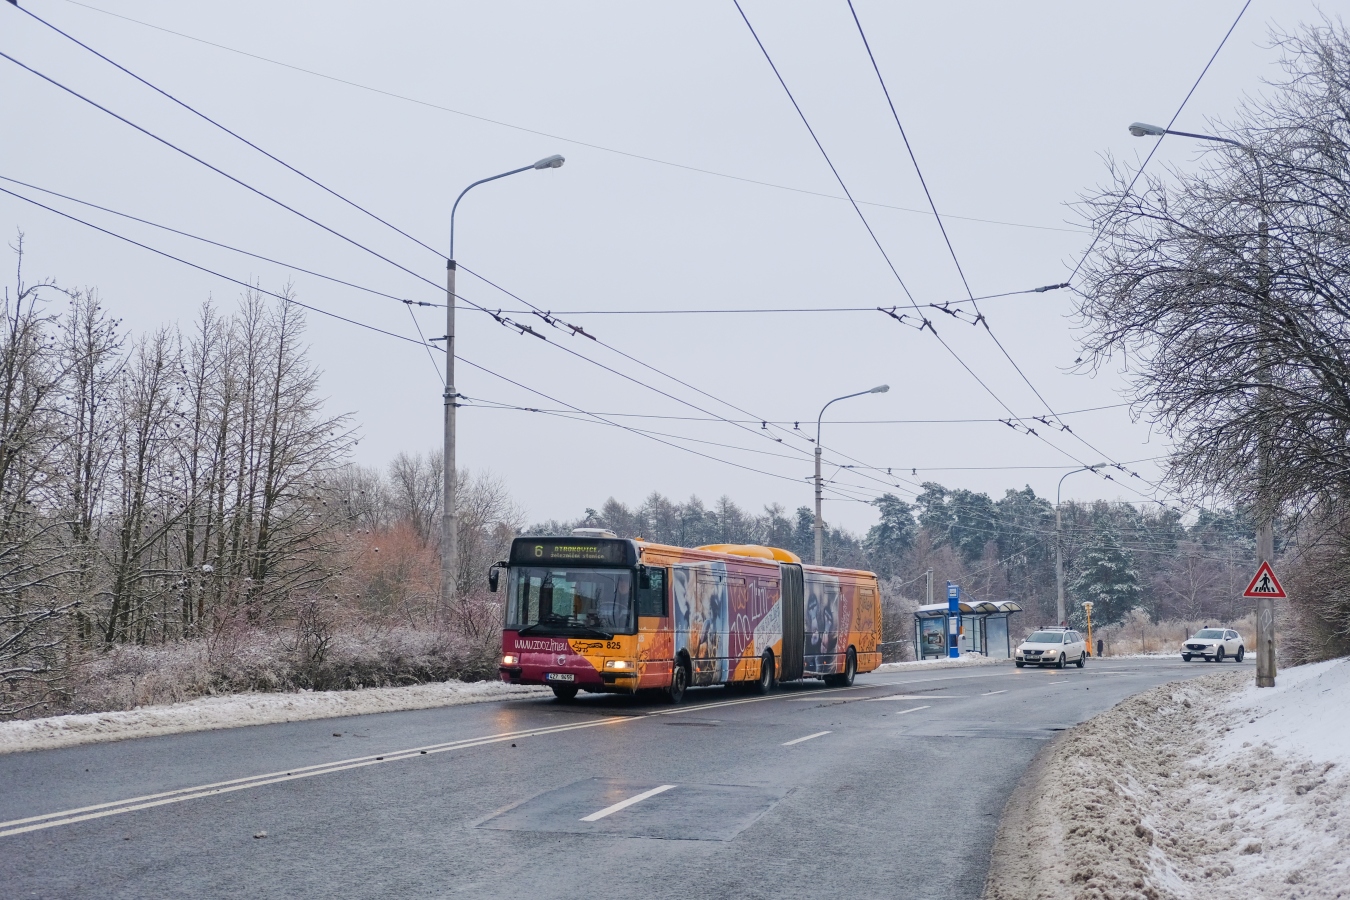 Zlín, Karosa Citybus 18M.2081 (Irisbus) # 825